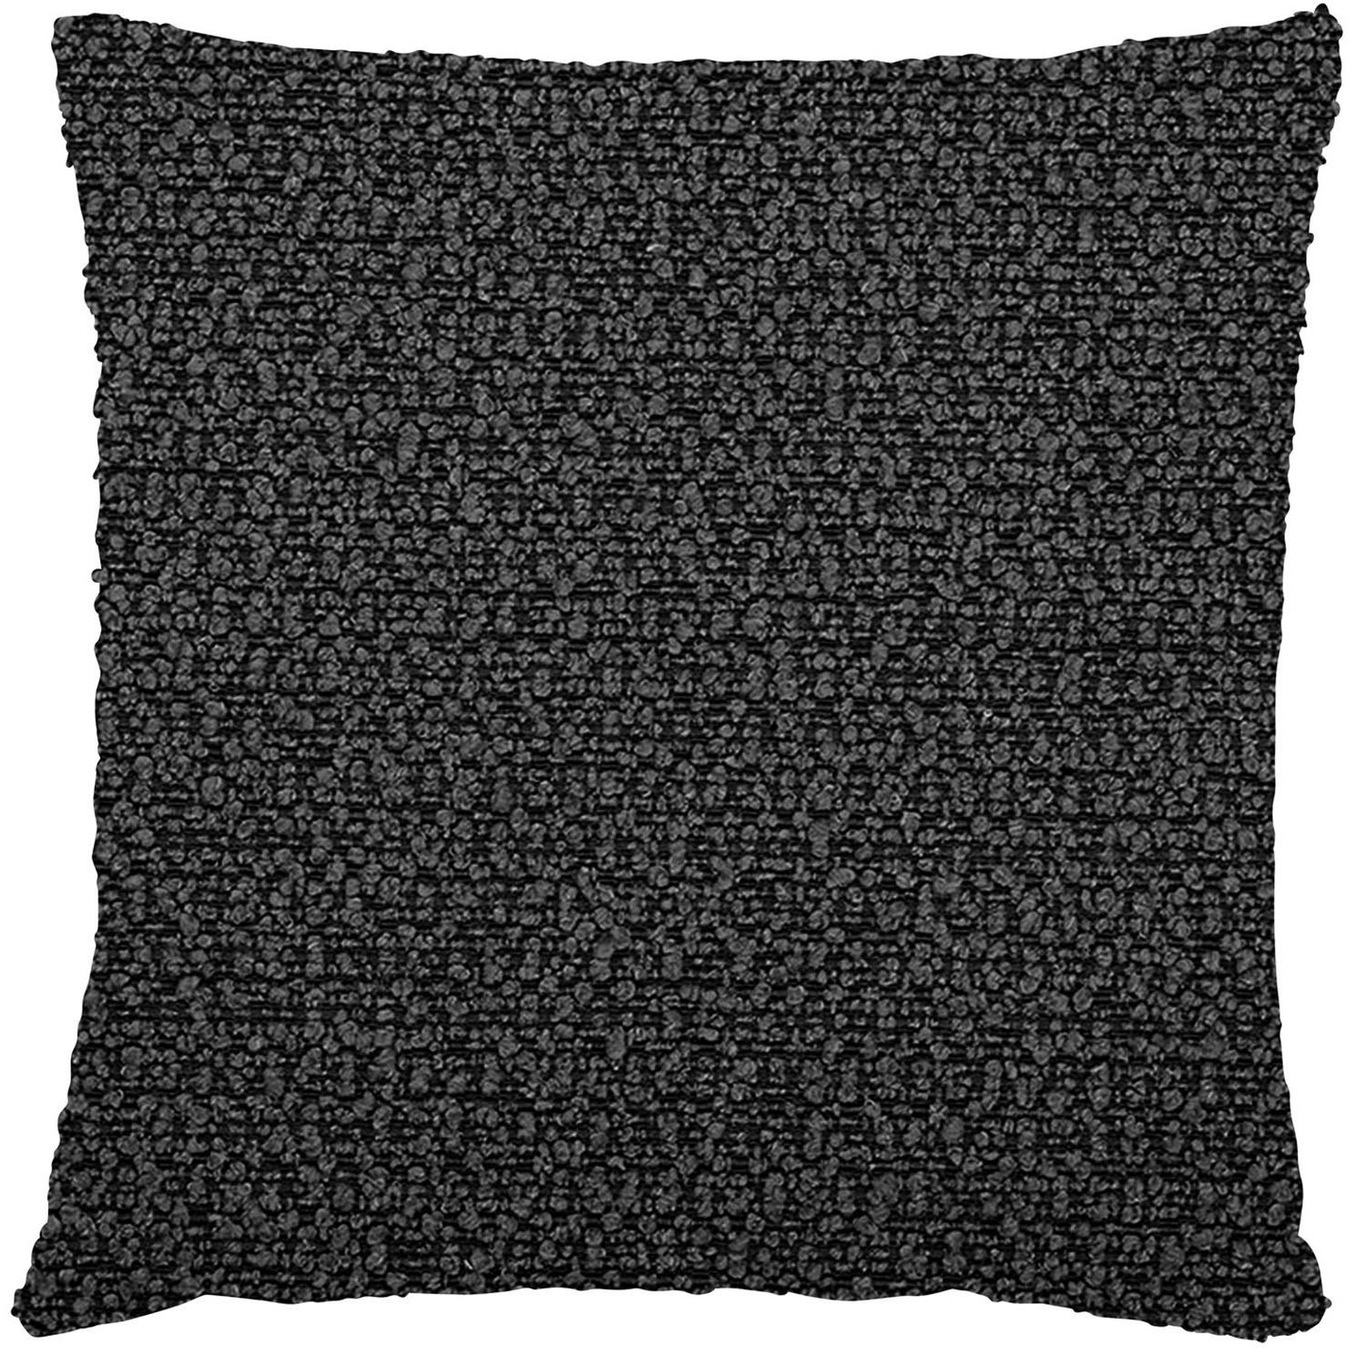 Boucle moment Cushion Cover 45X45 cm, Black